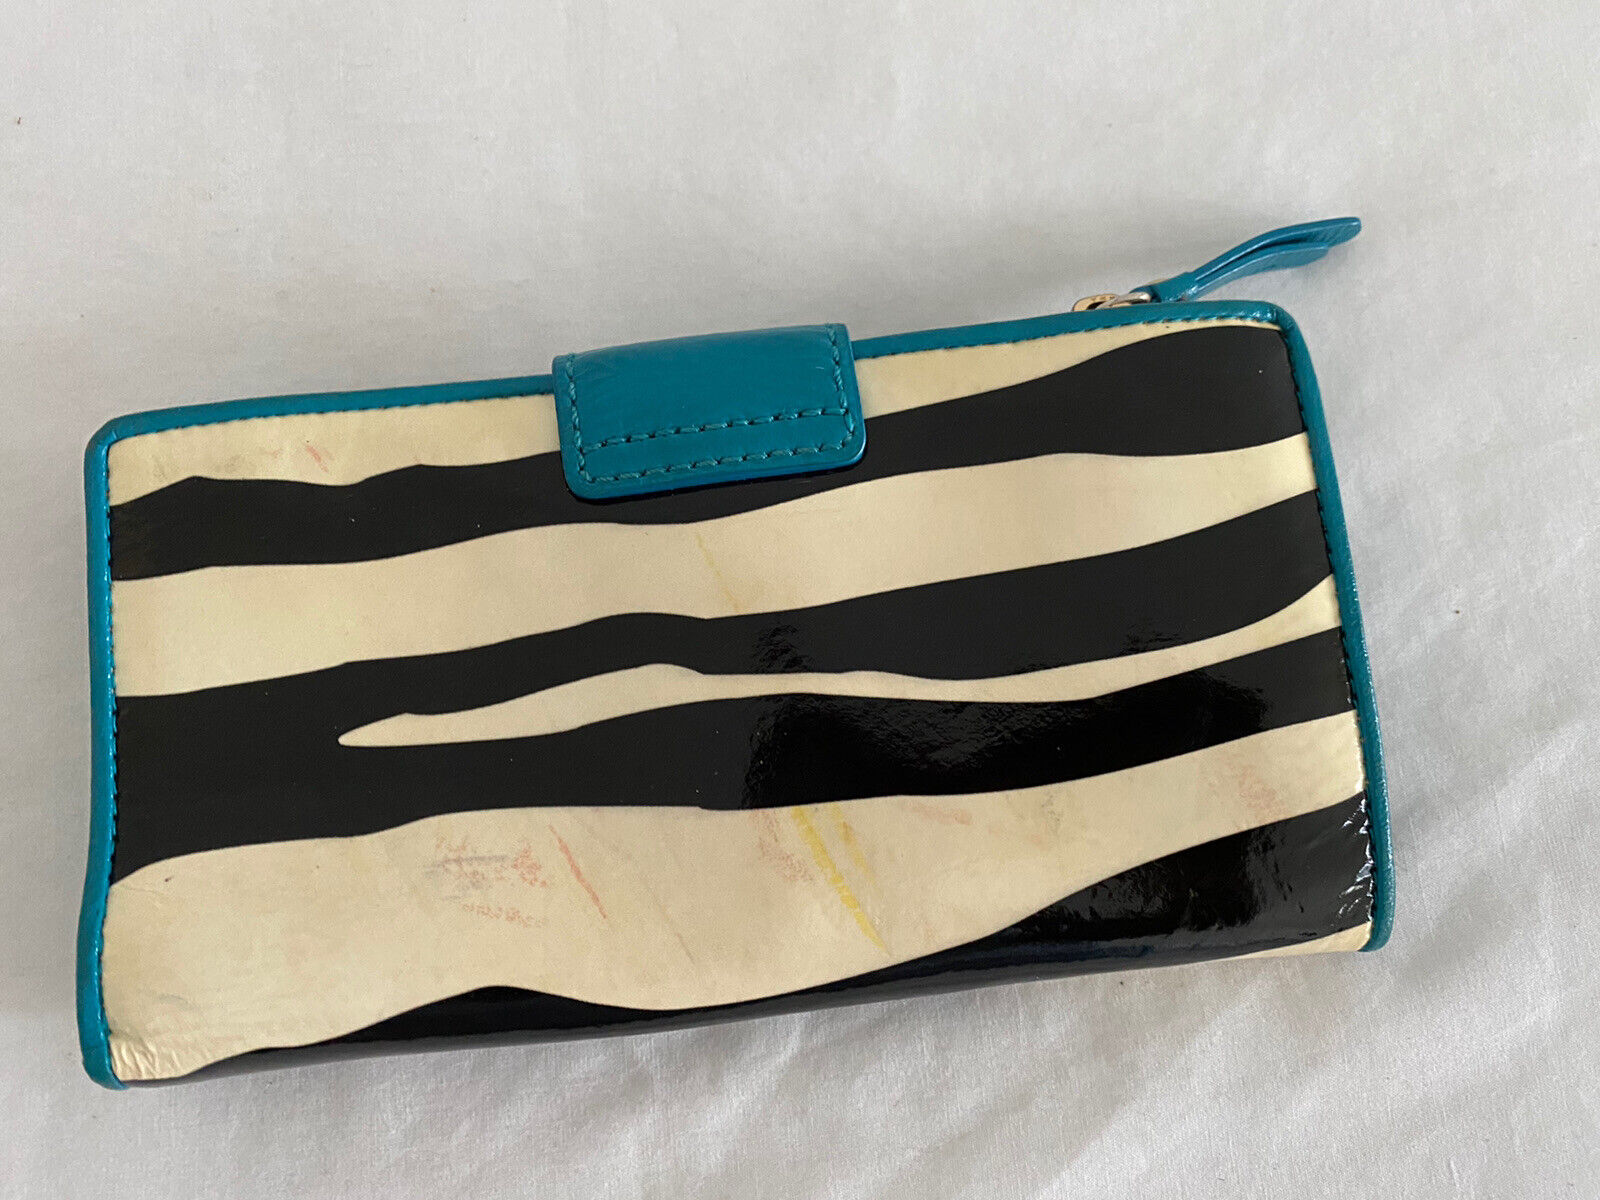 Michael Kors Zebra Print Patent Leather Aqua Trim Clutch Wallet